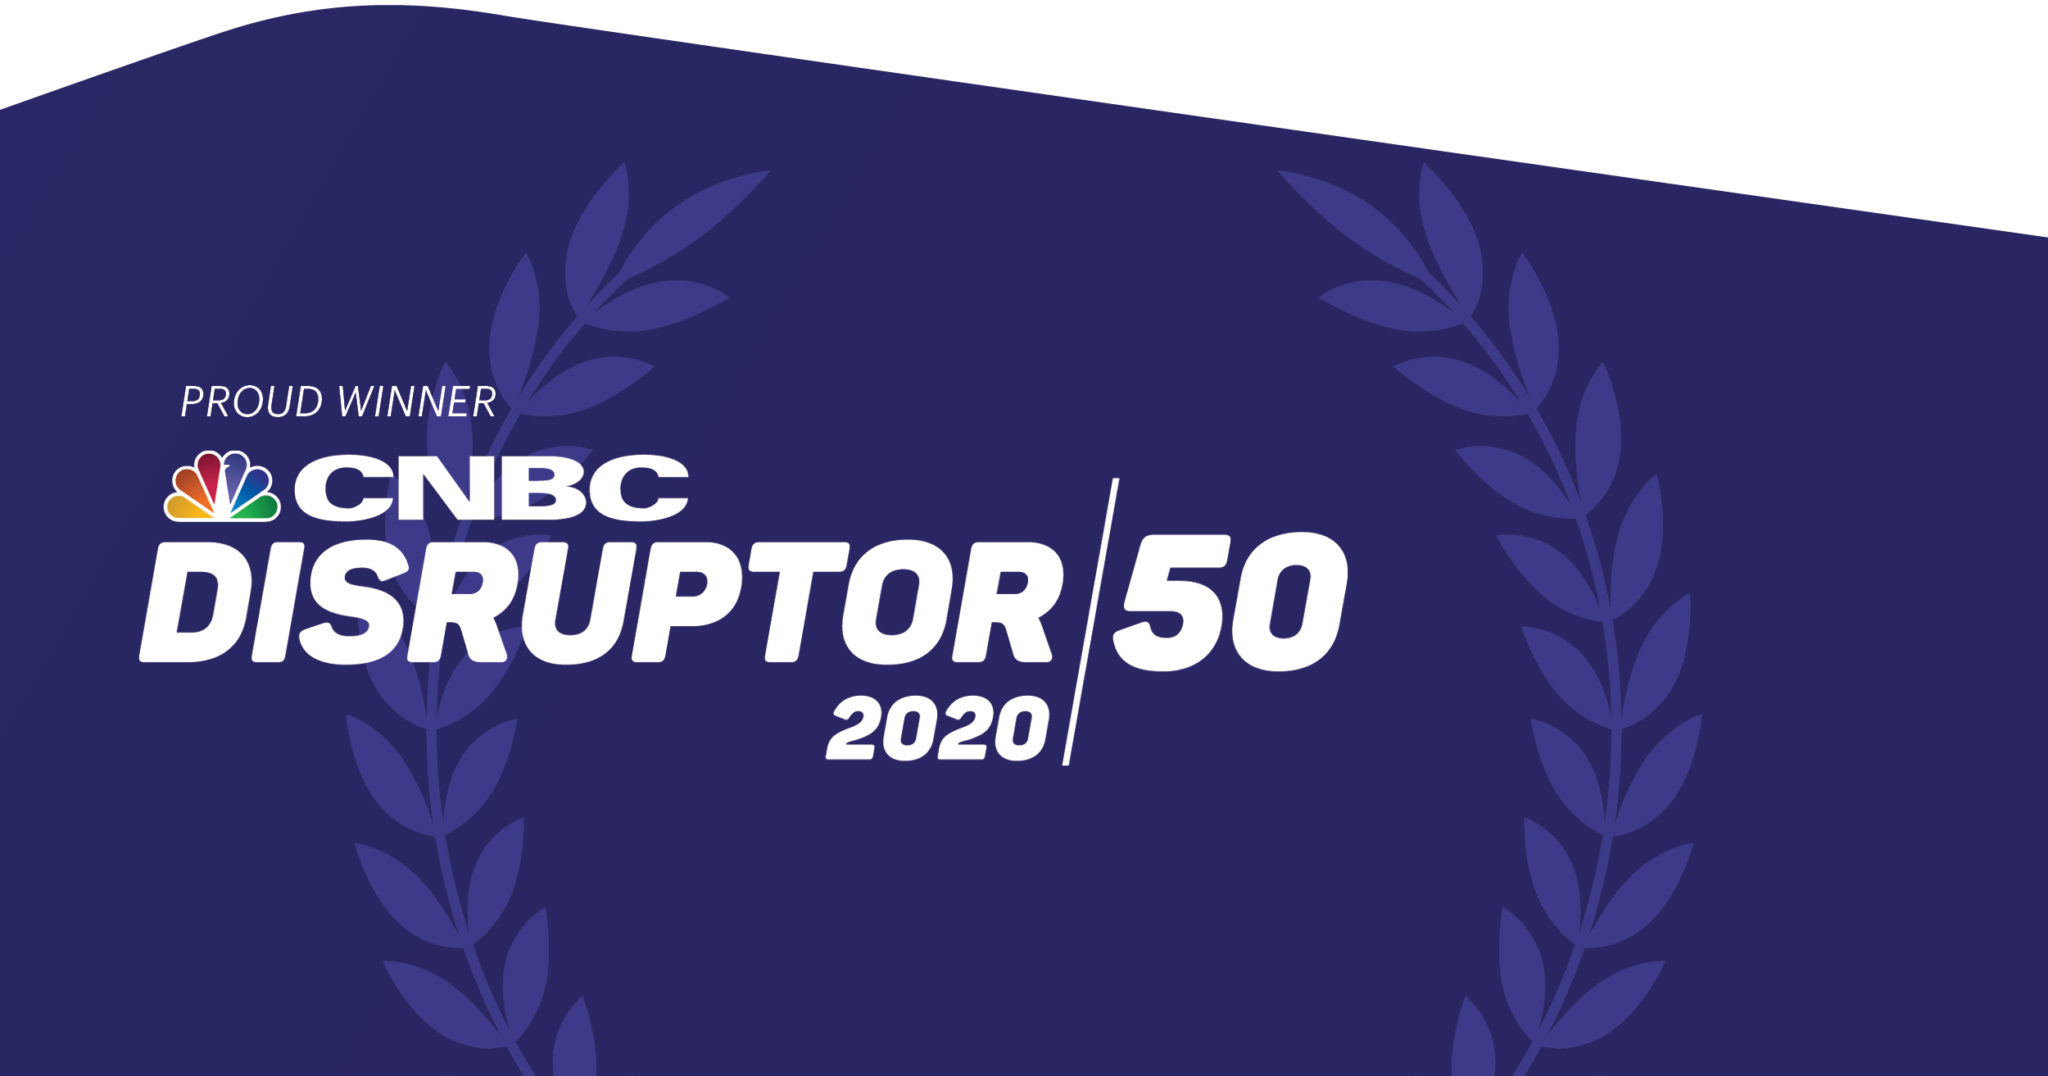 Marqeta named CNBC-Disruptor50